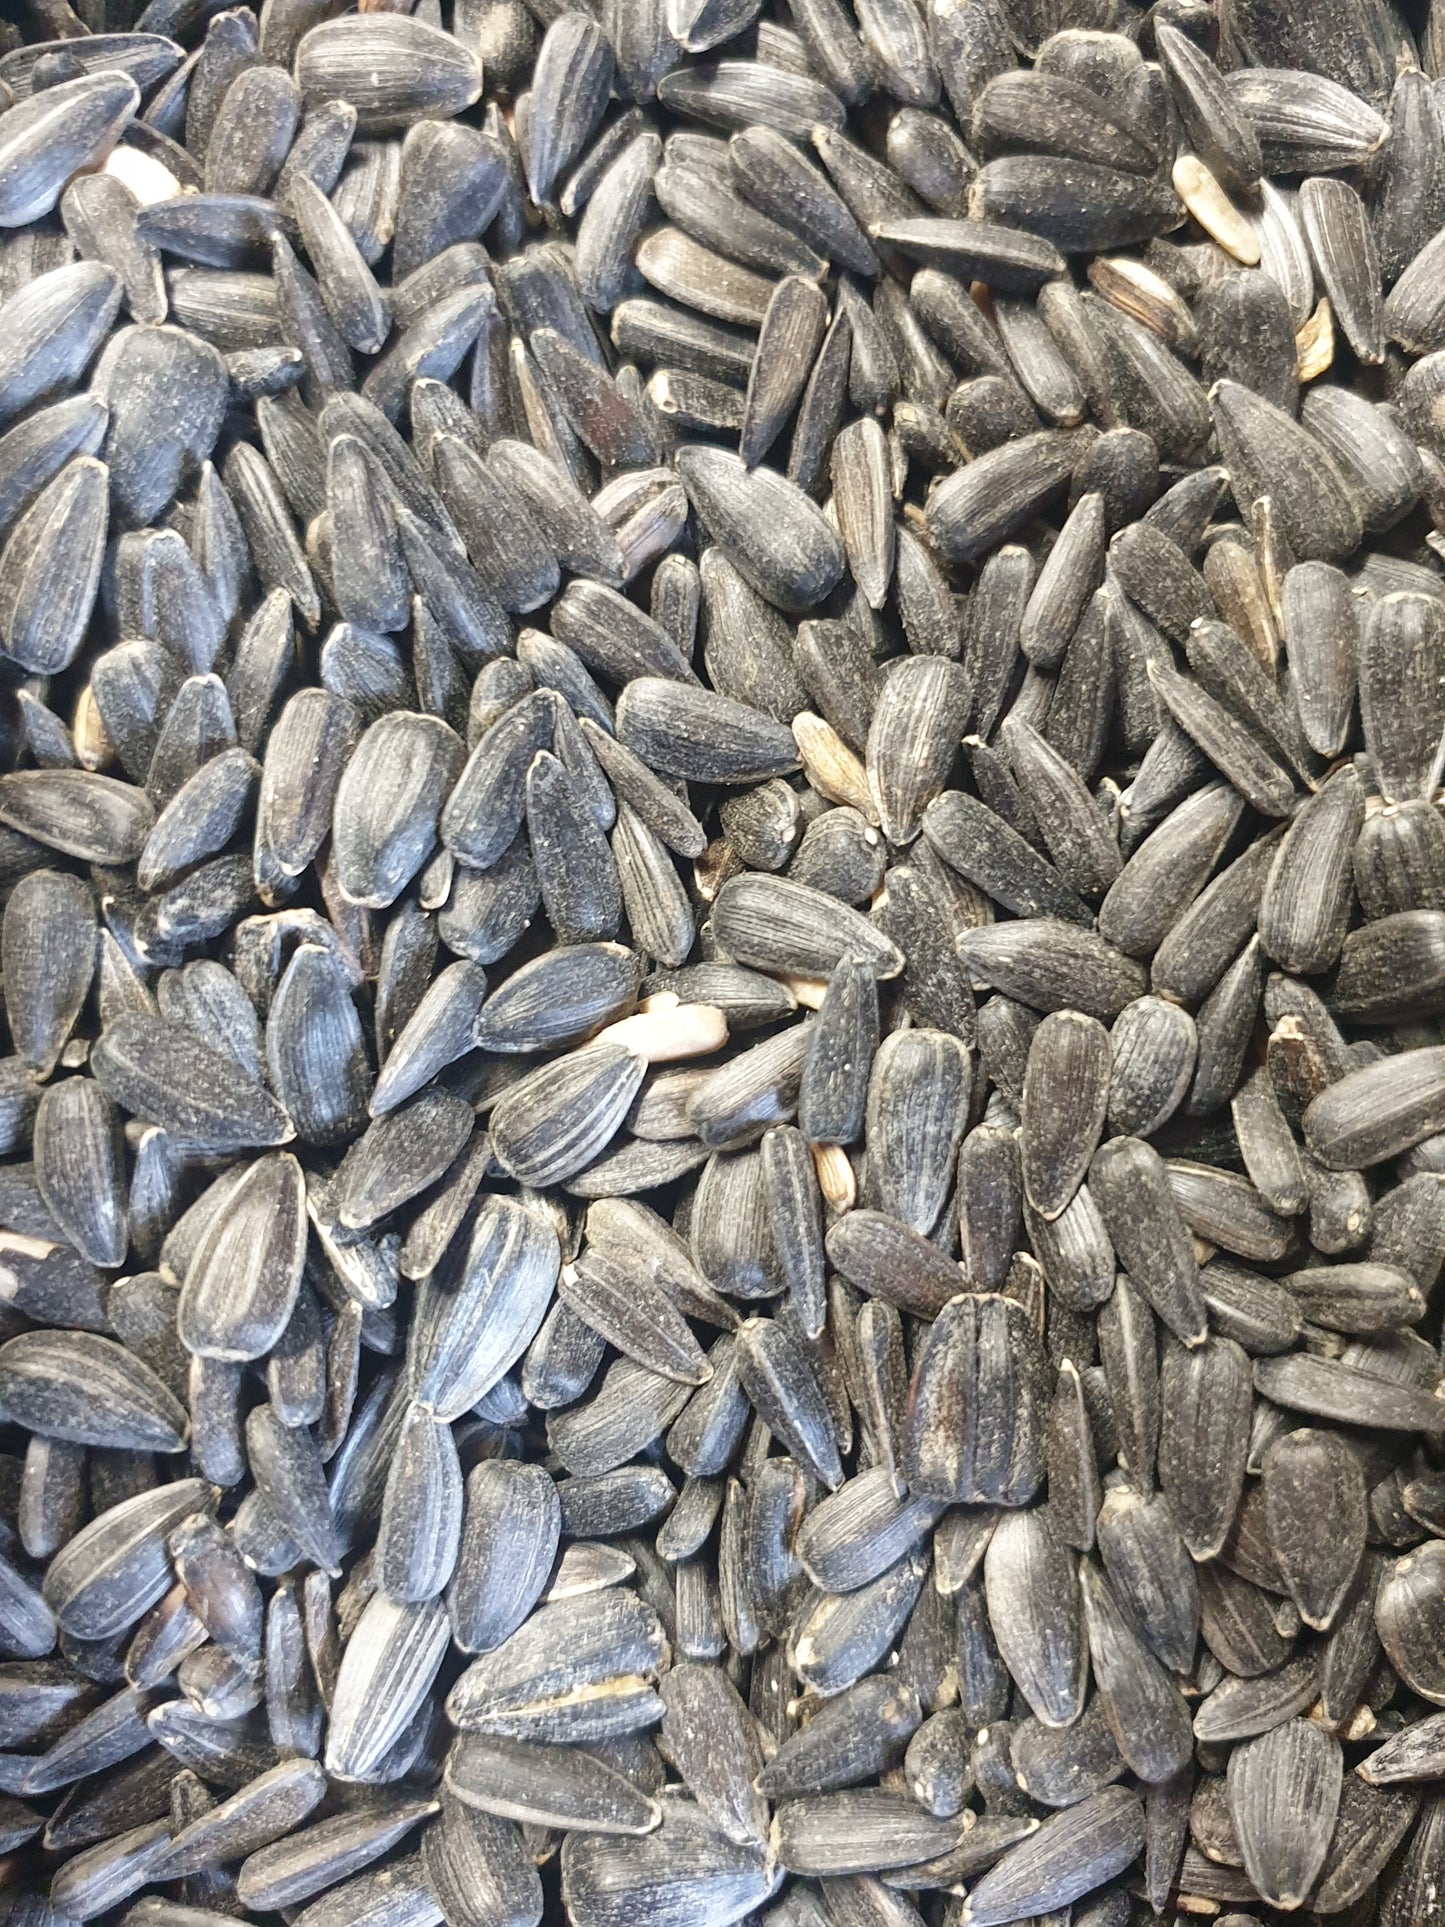 Bird Black Sunflower Seeds - 20kg bag